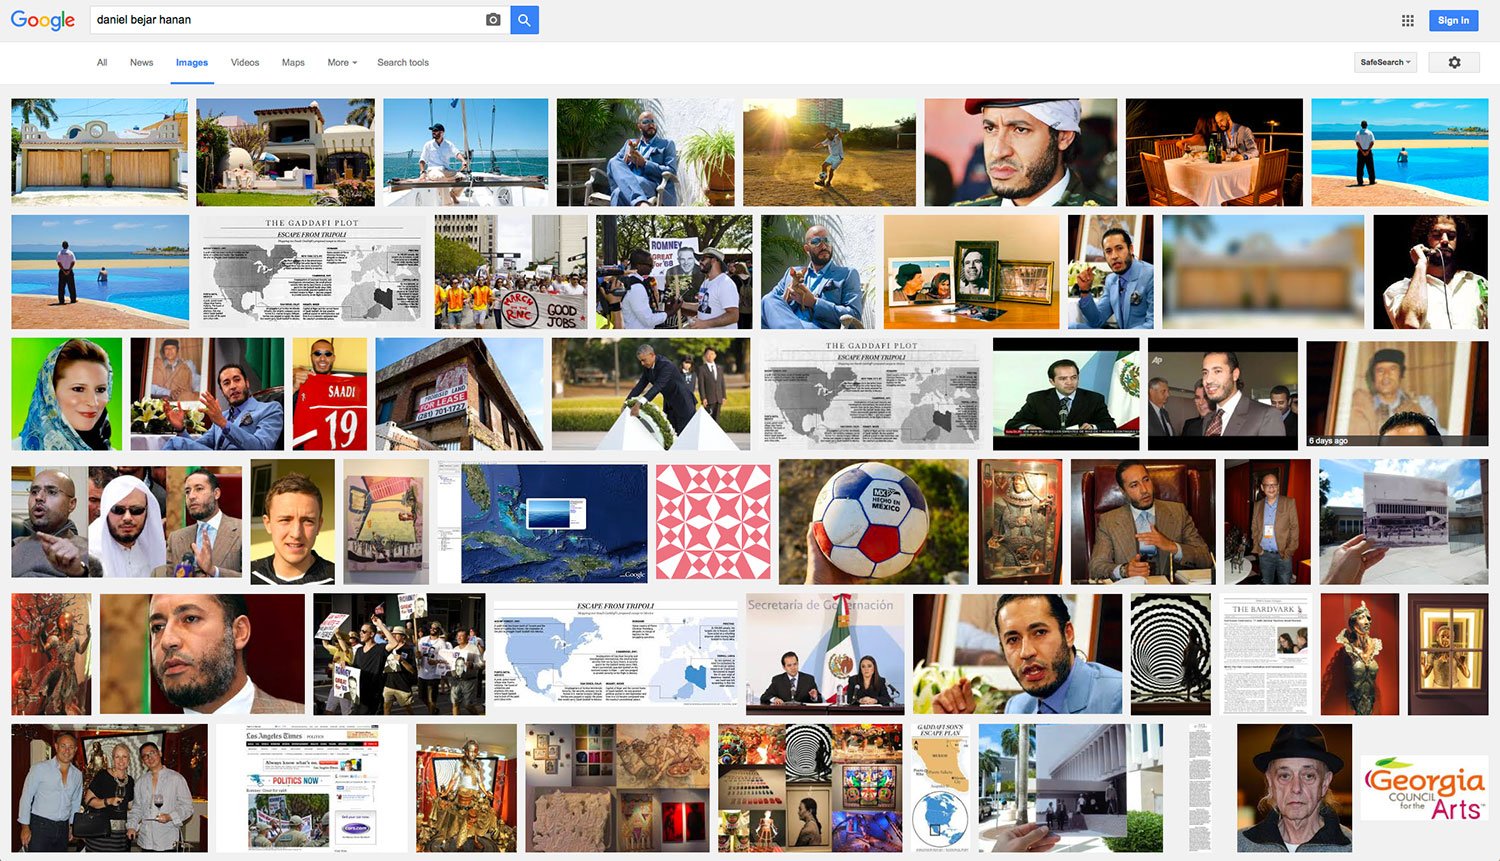   Operation Guest (Google Image Search)  (Screenshot of Google Image Search results for Daniel Bejar Hanan) 